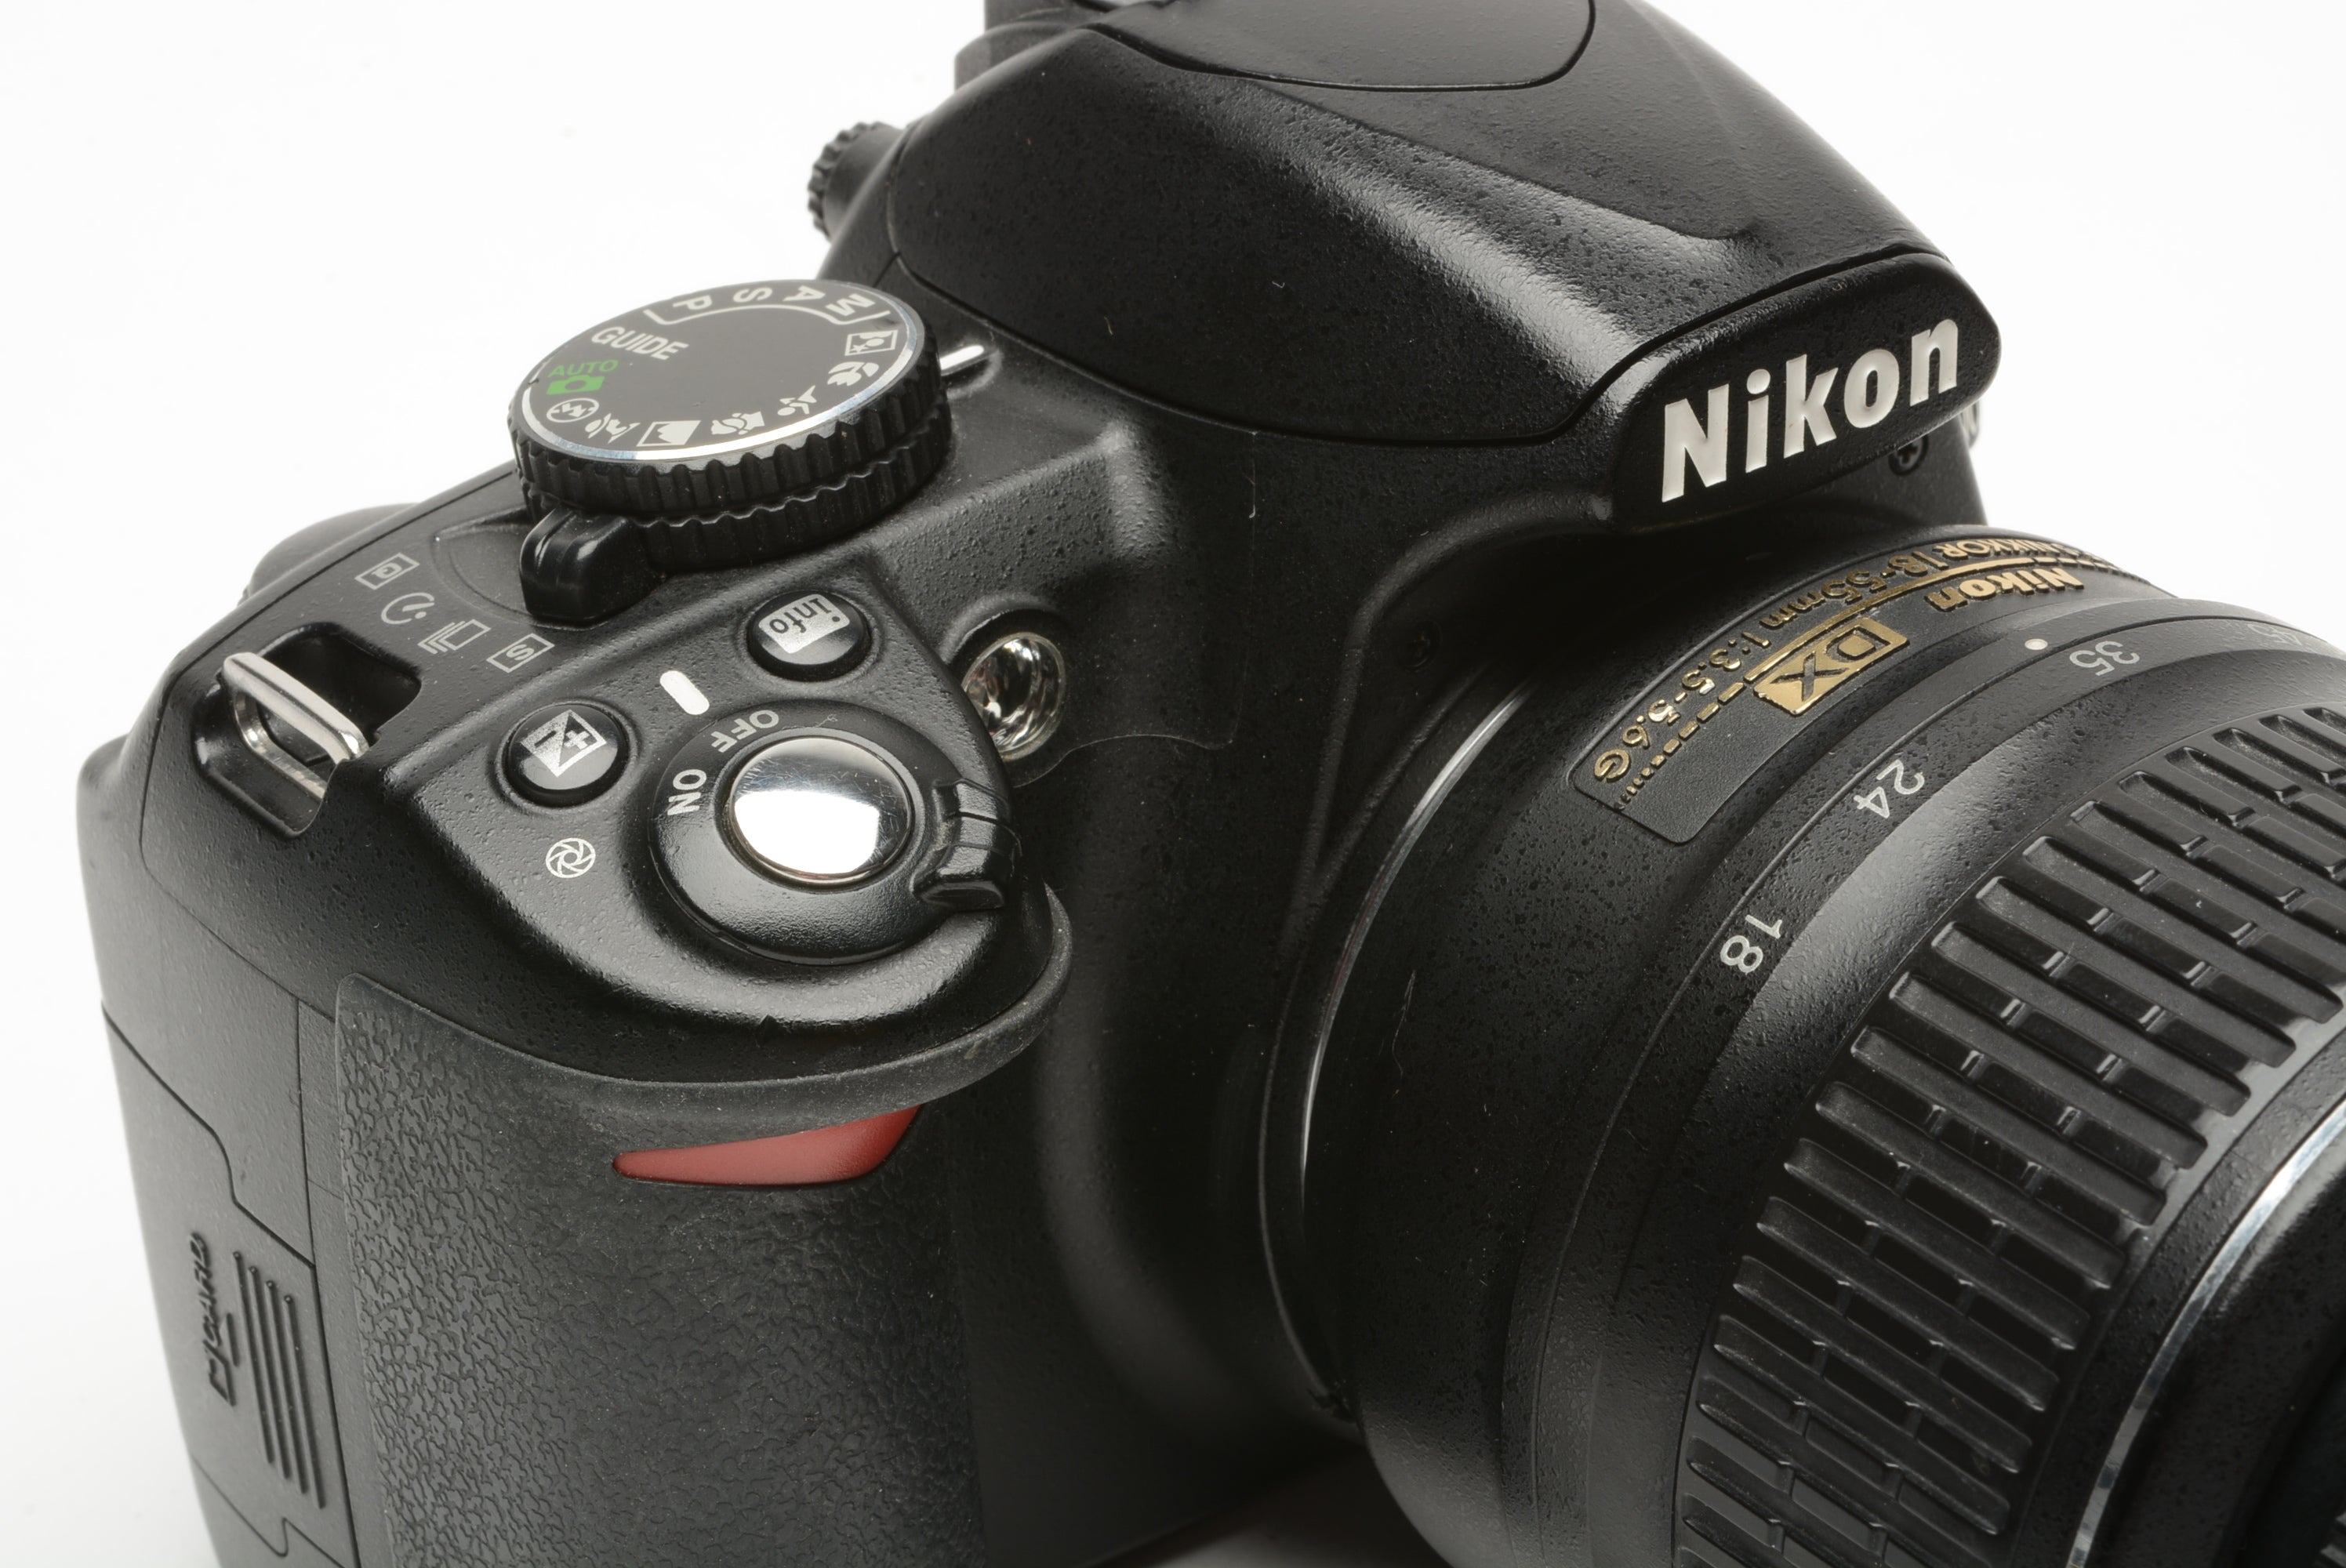 Nikon D3100 DSLR w/Nikkor AFS 18-55mm f3.5-5.6G zoom, batt+charger